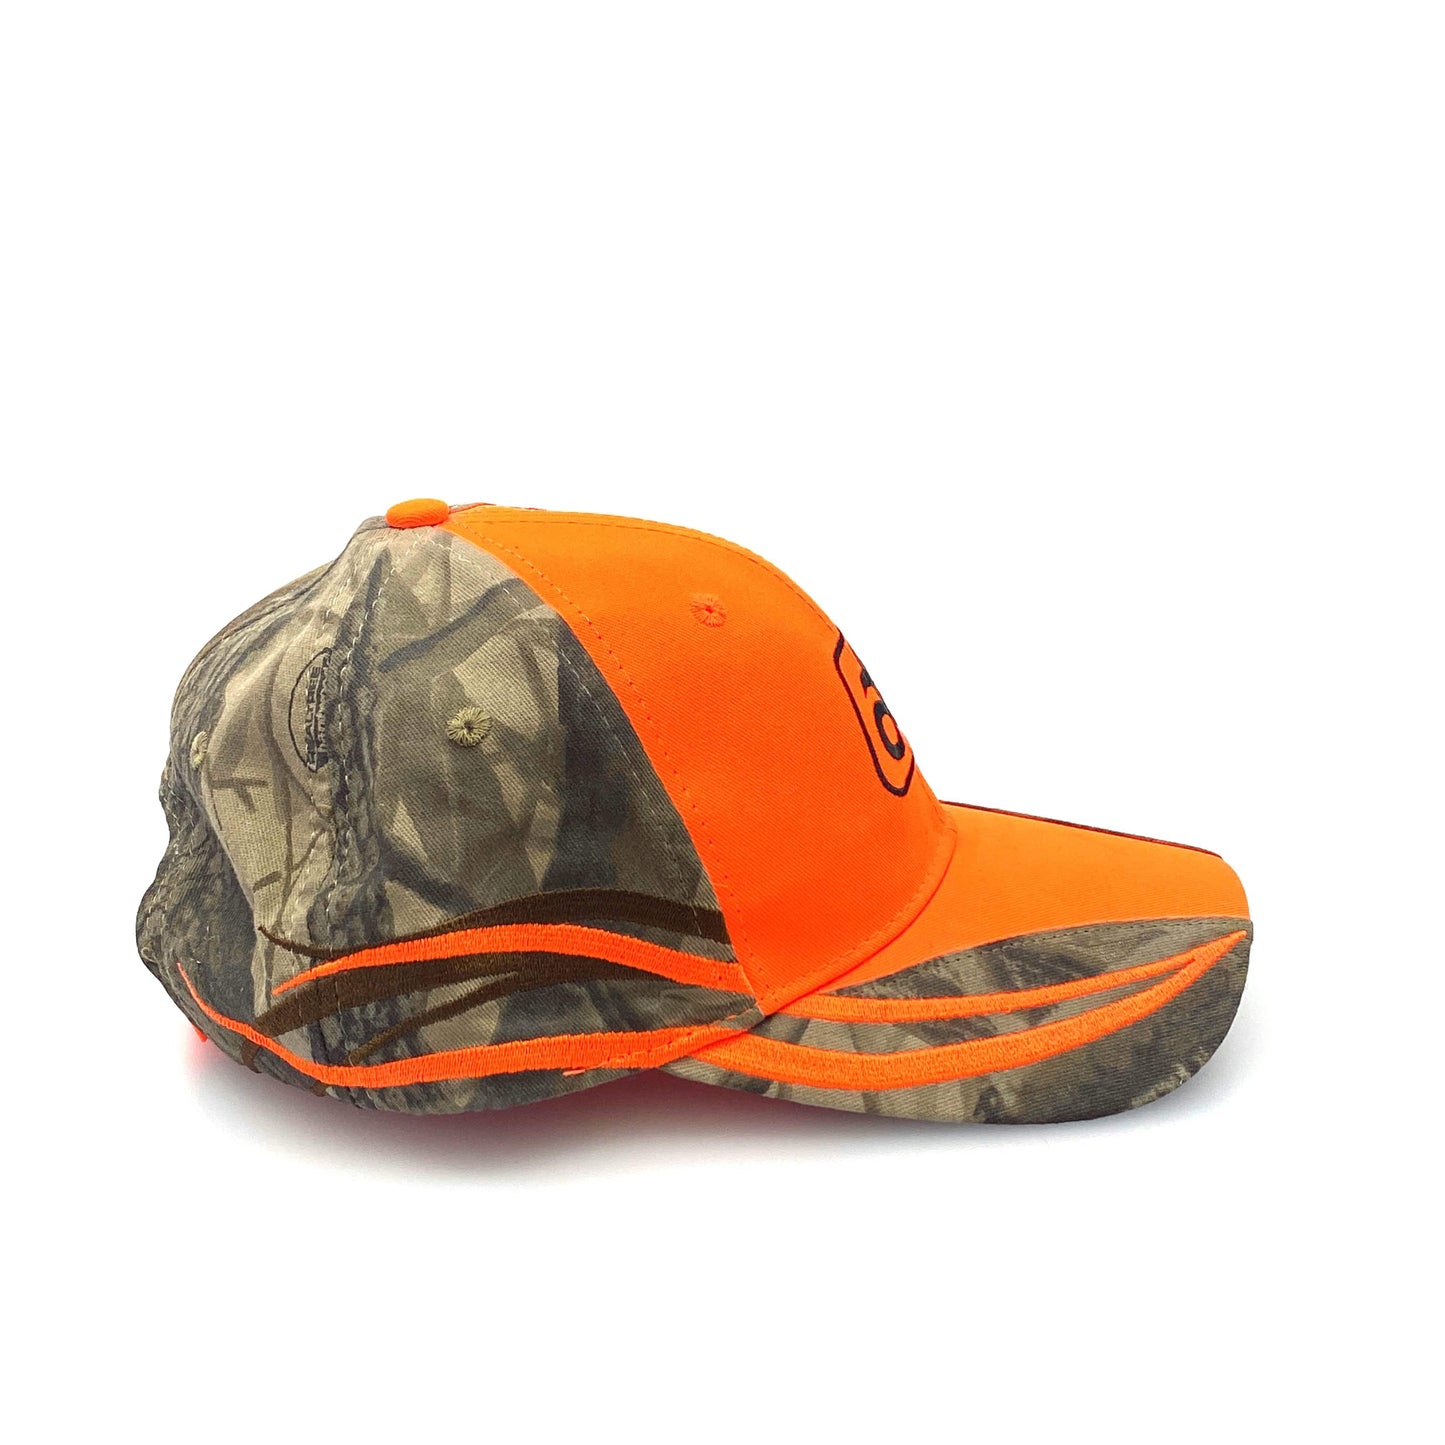 Pioneer Seed Mens Adjustable Baseball Hat Safety Orange and Camouflage